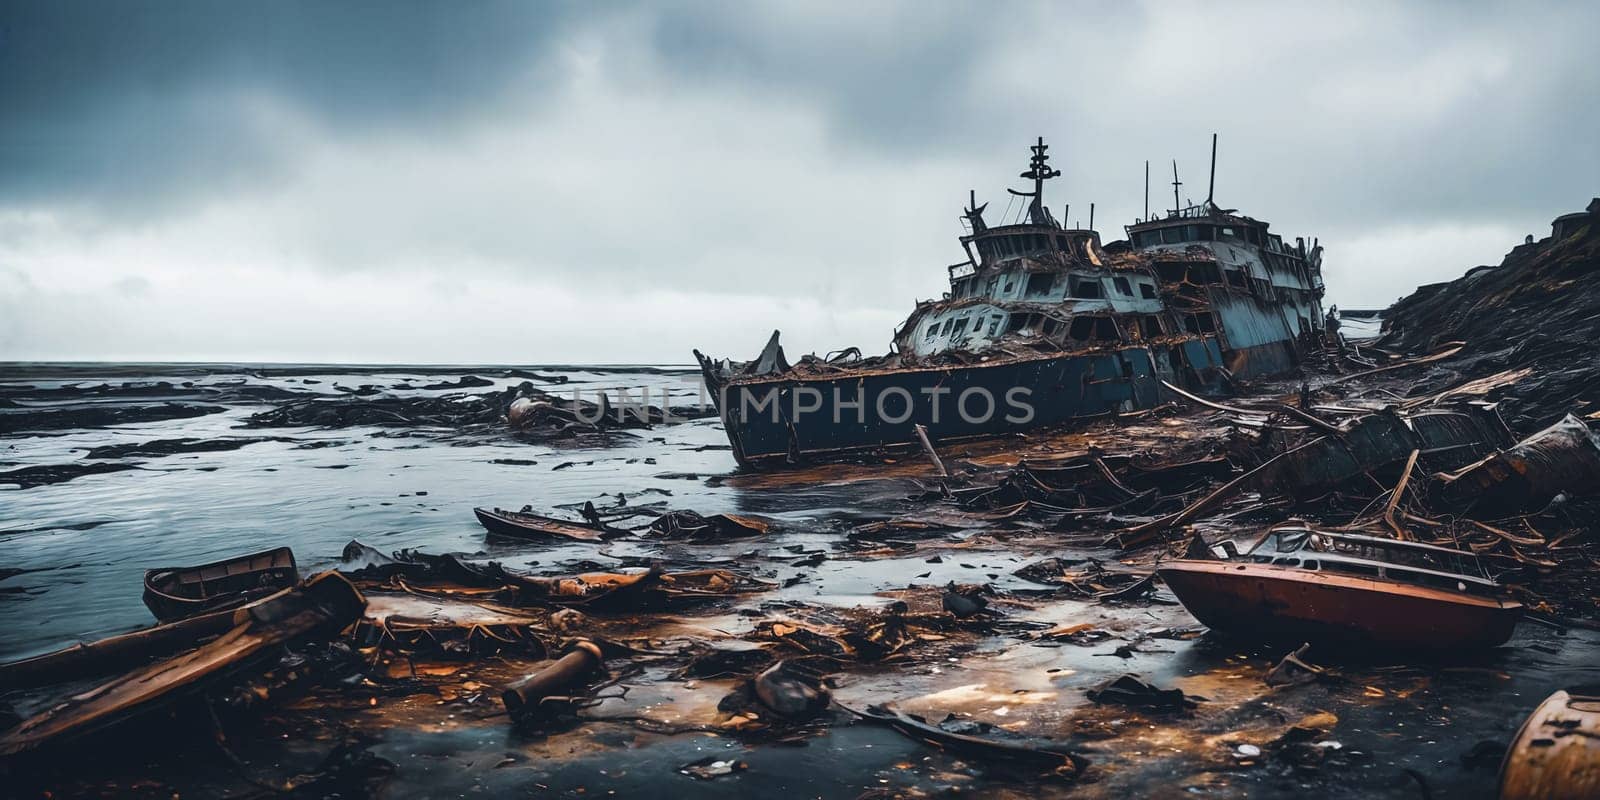 Shipwrecked World. Post-apocalyptic coastal scene with sunken ships, washed-up debris by GoodOlga